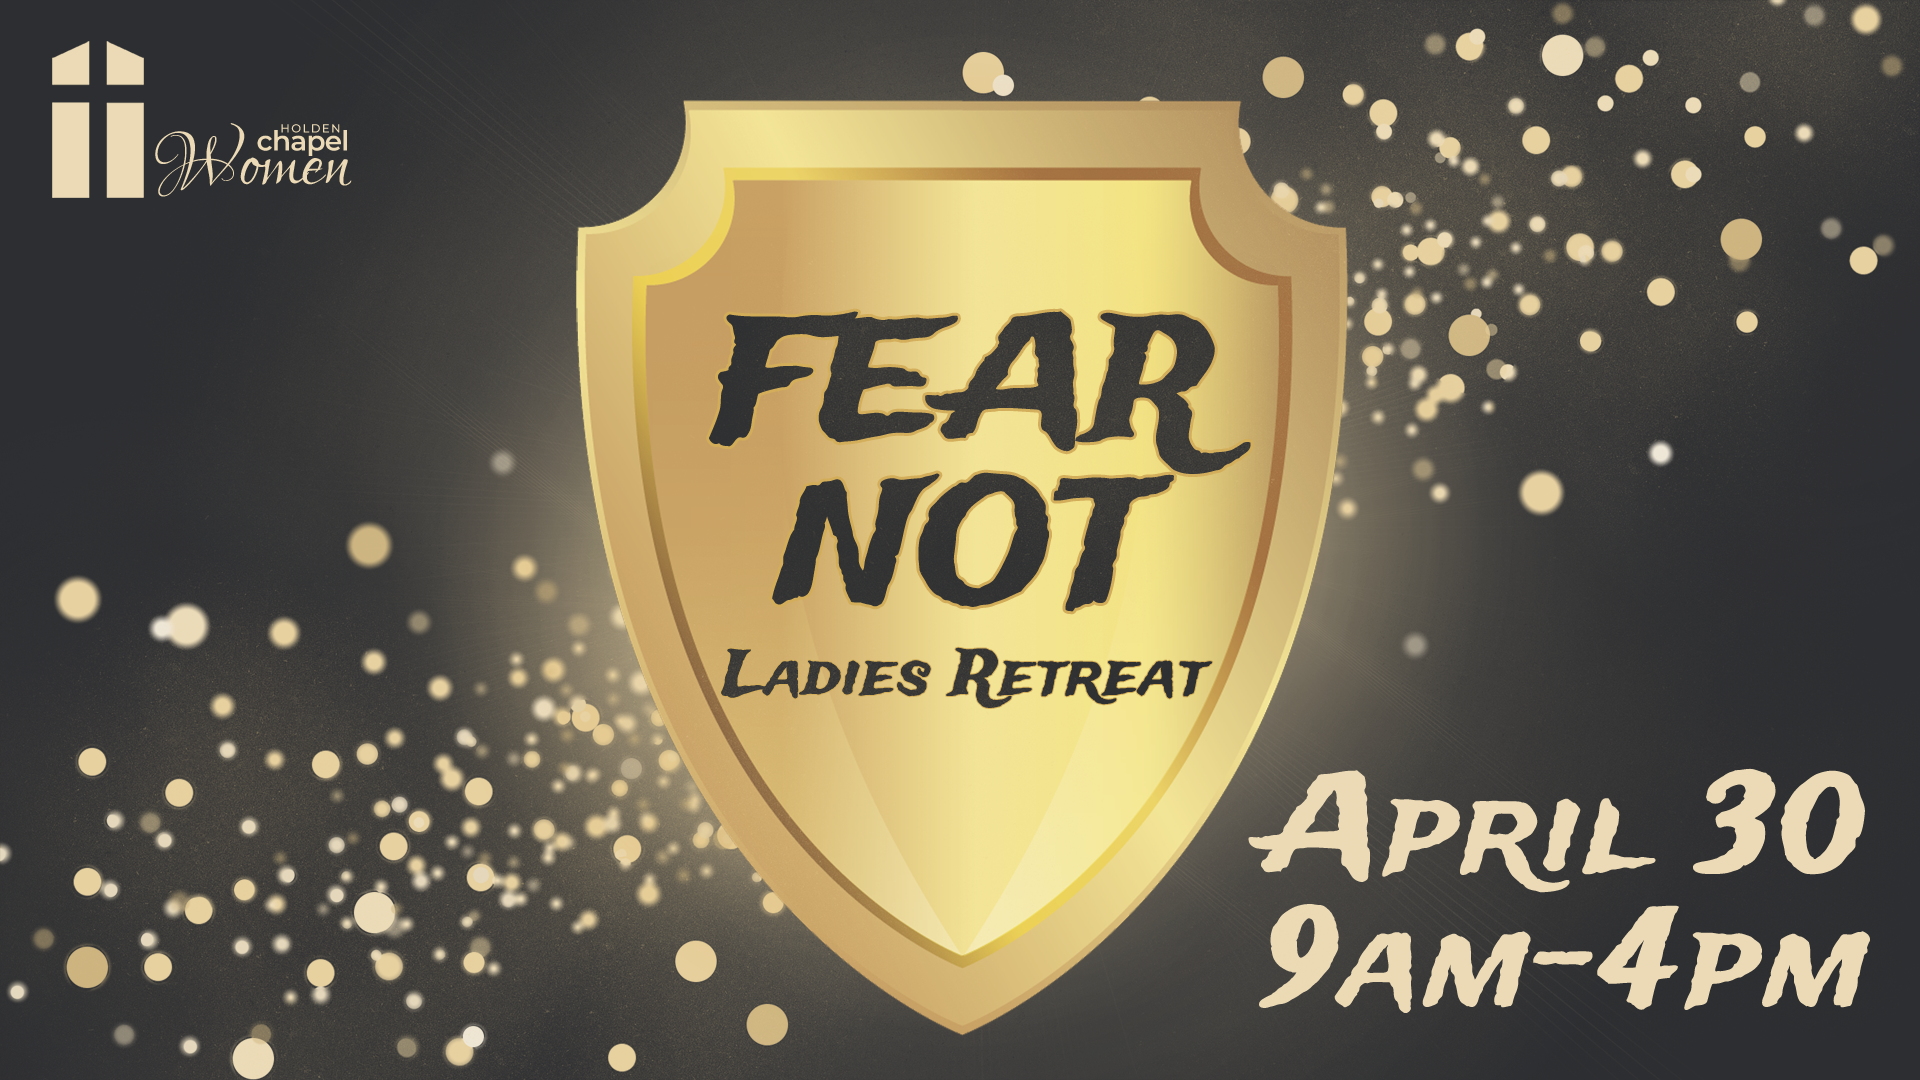 fear not ladies retreat image